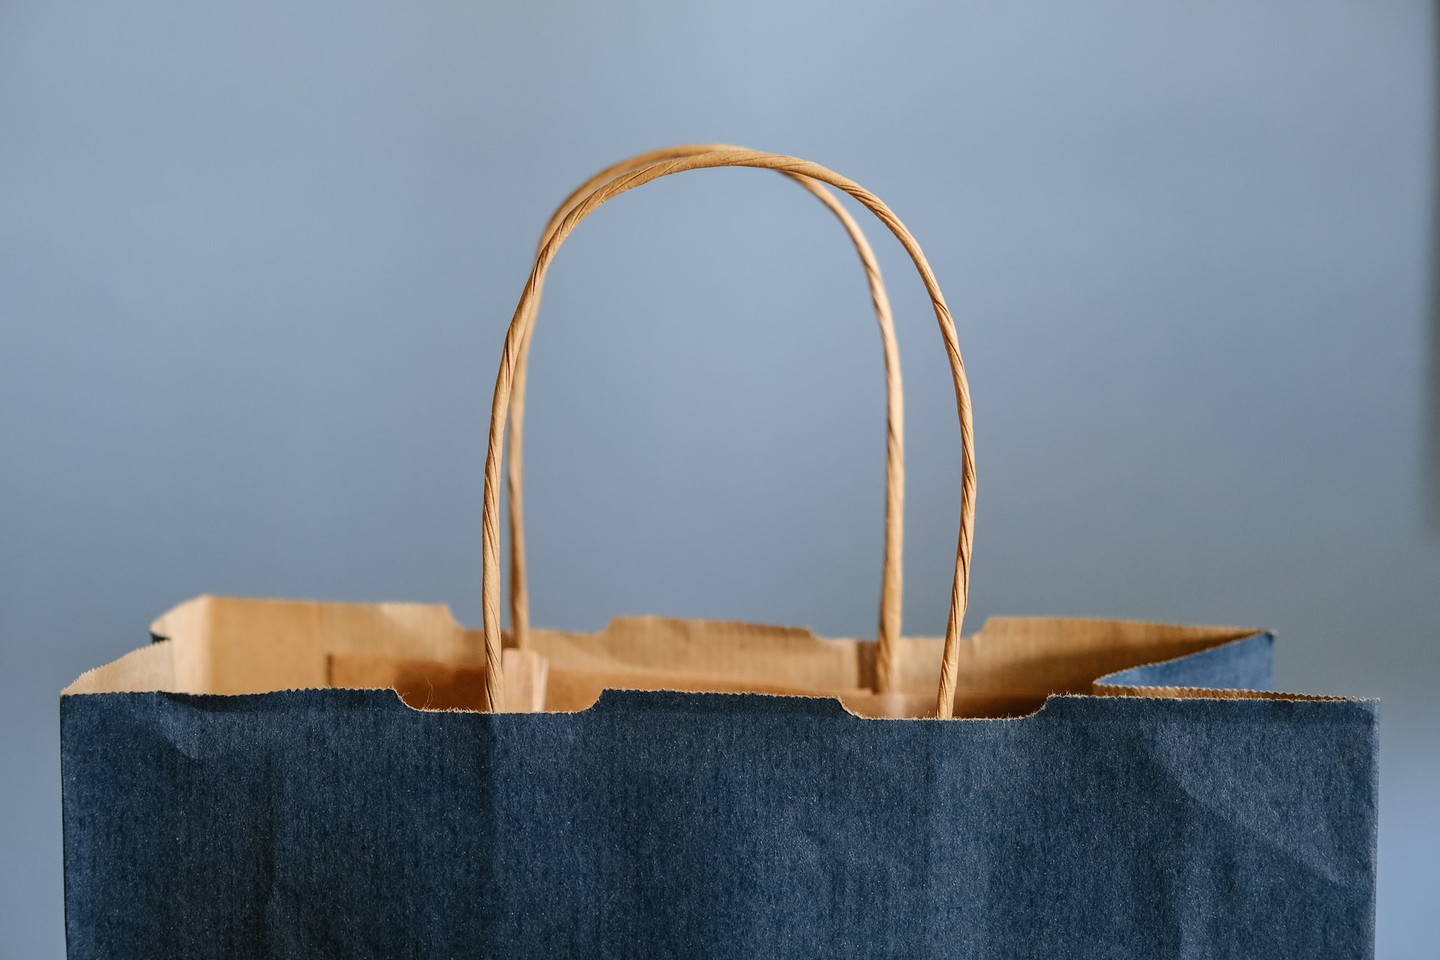 Paper shopping bag handles